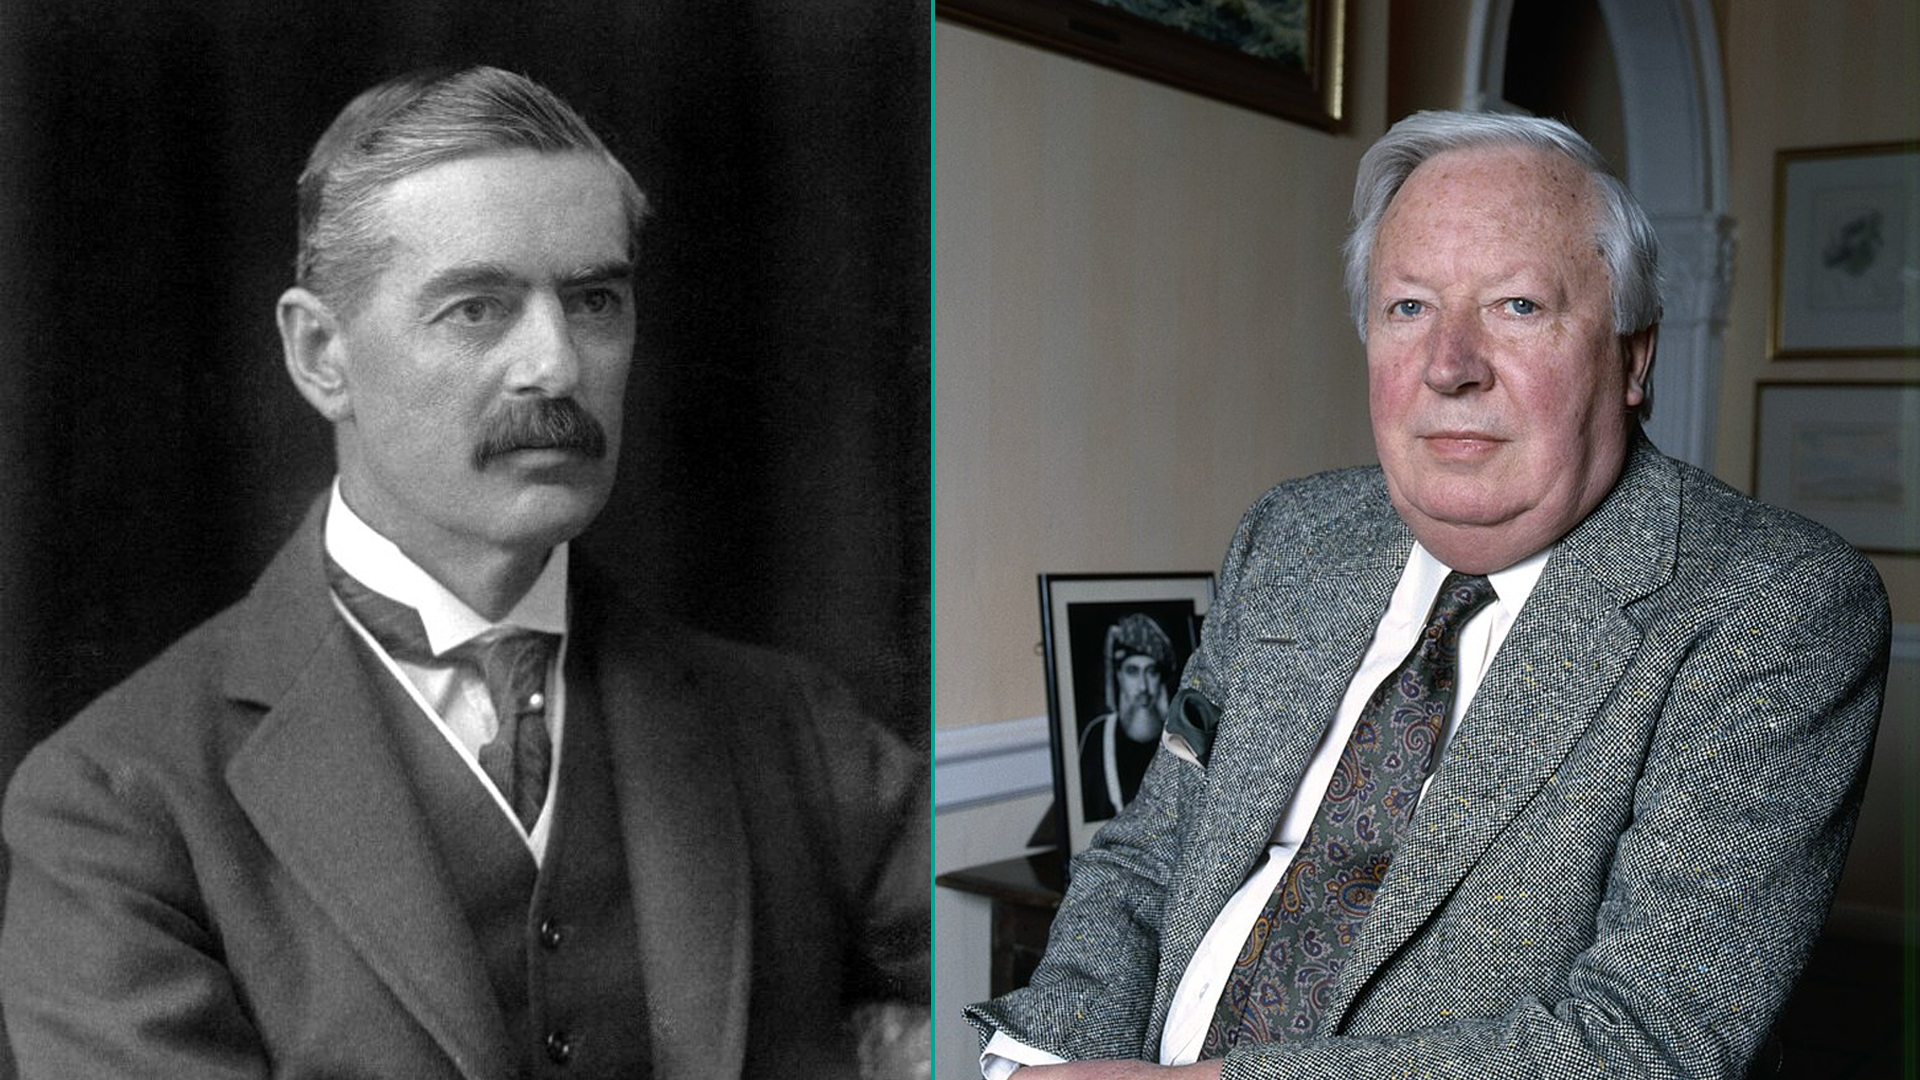 Neville Chamberlain and Edward Heath